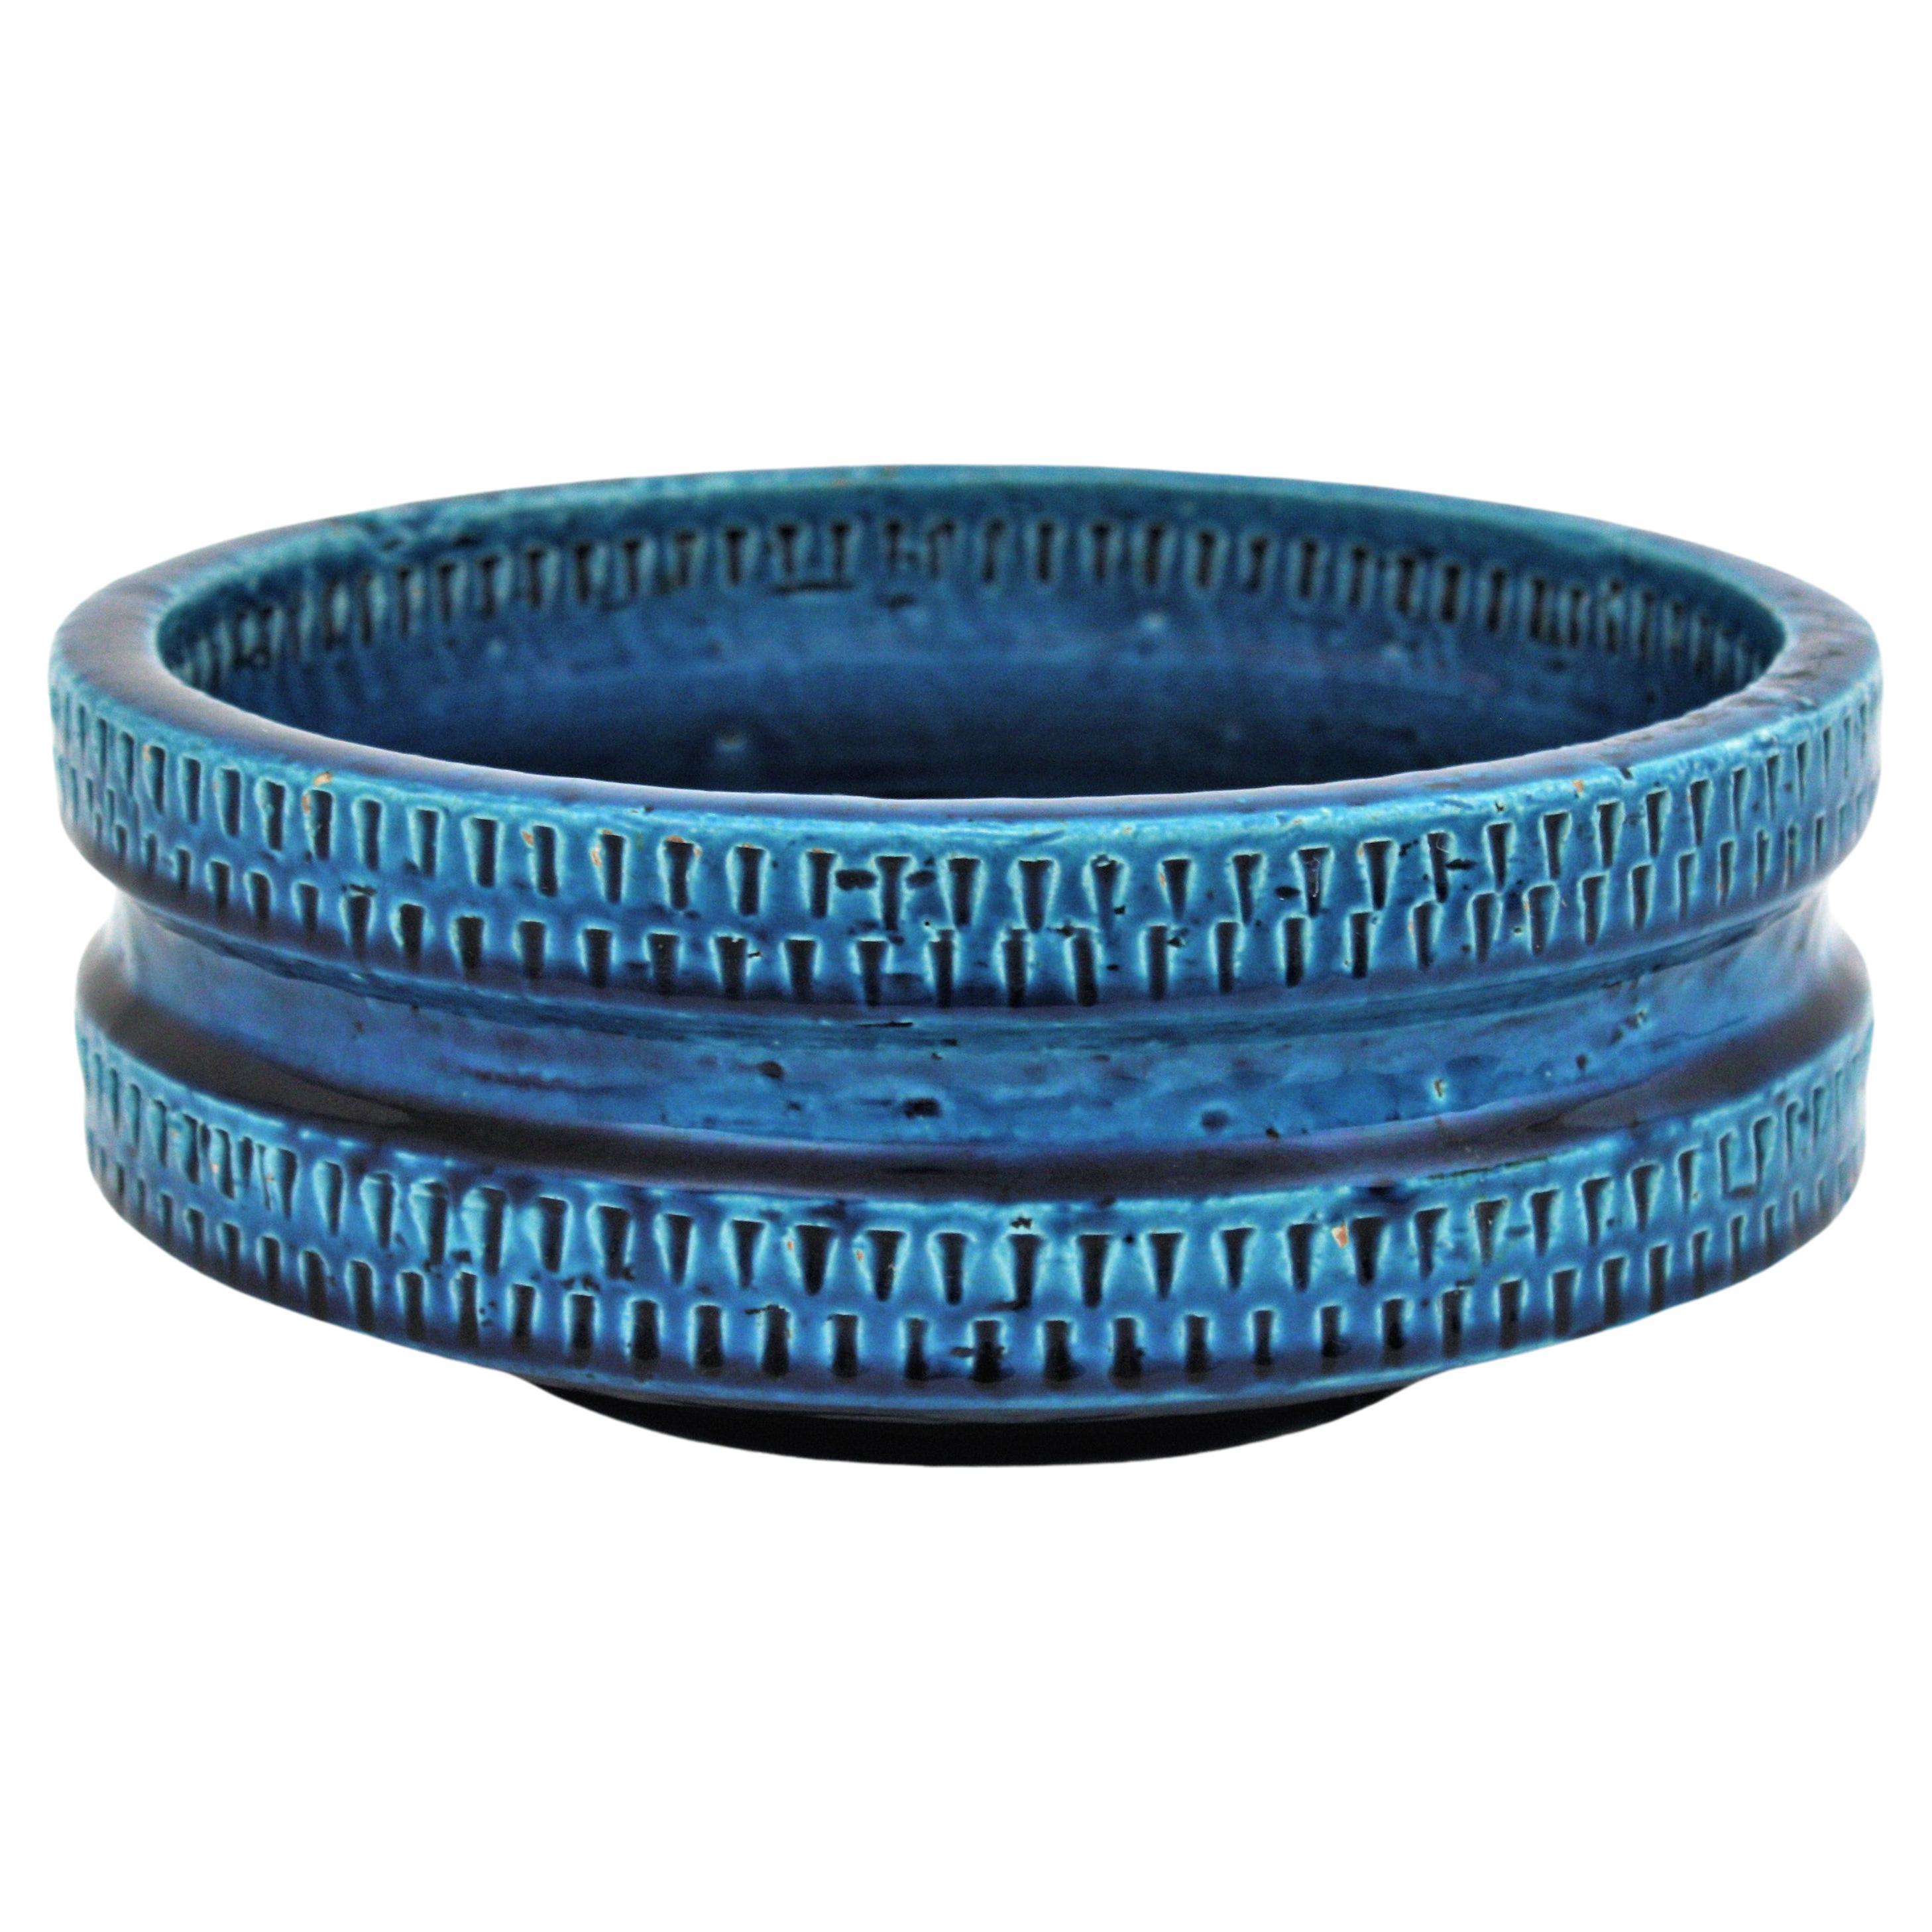 SIC Rimini Blue Glazed Ceramic Large Centerpiece Bowl, Bitossi Aldo Londi Style